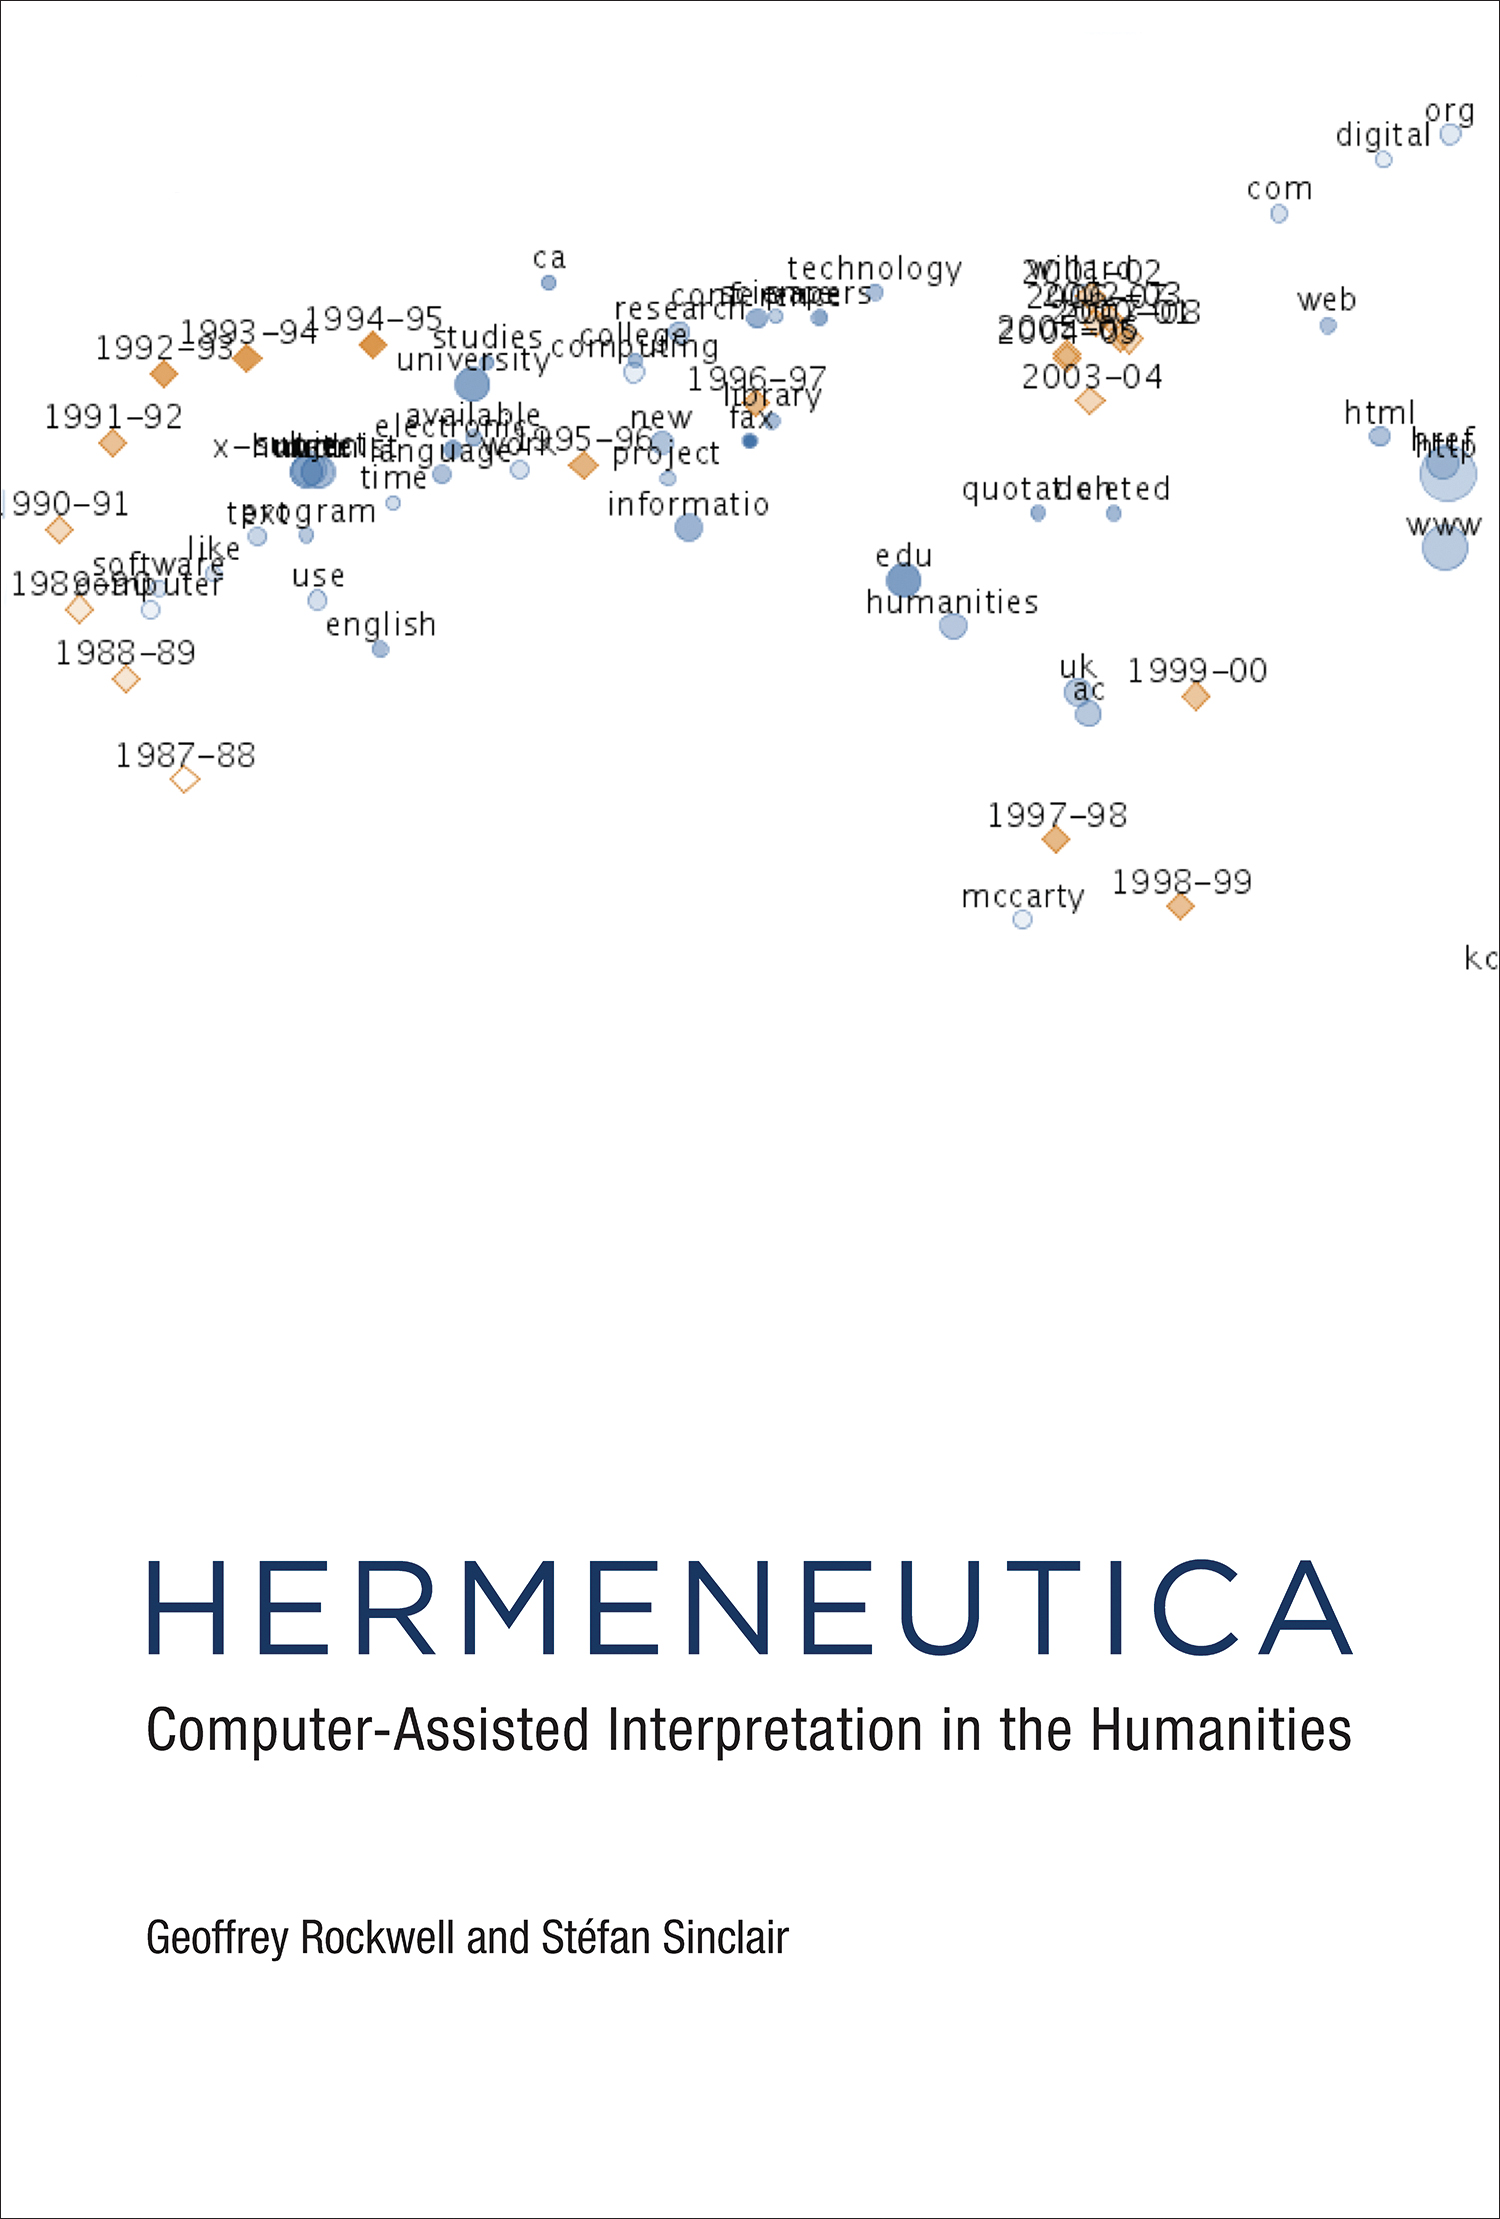 Hermeneutica Book Image